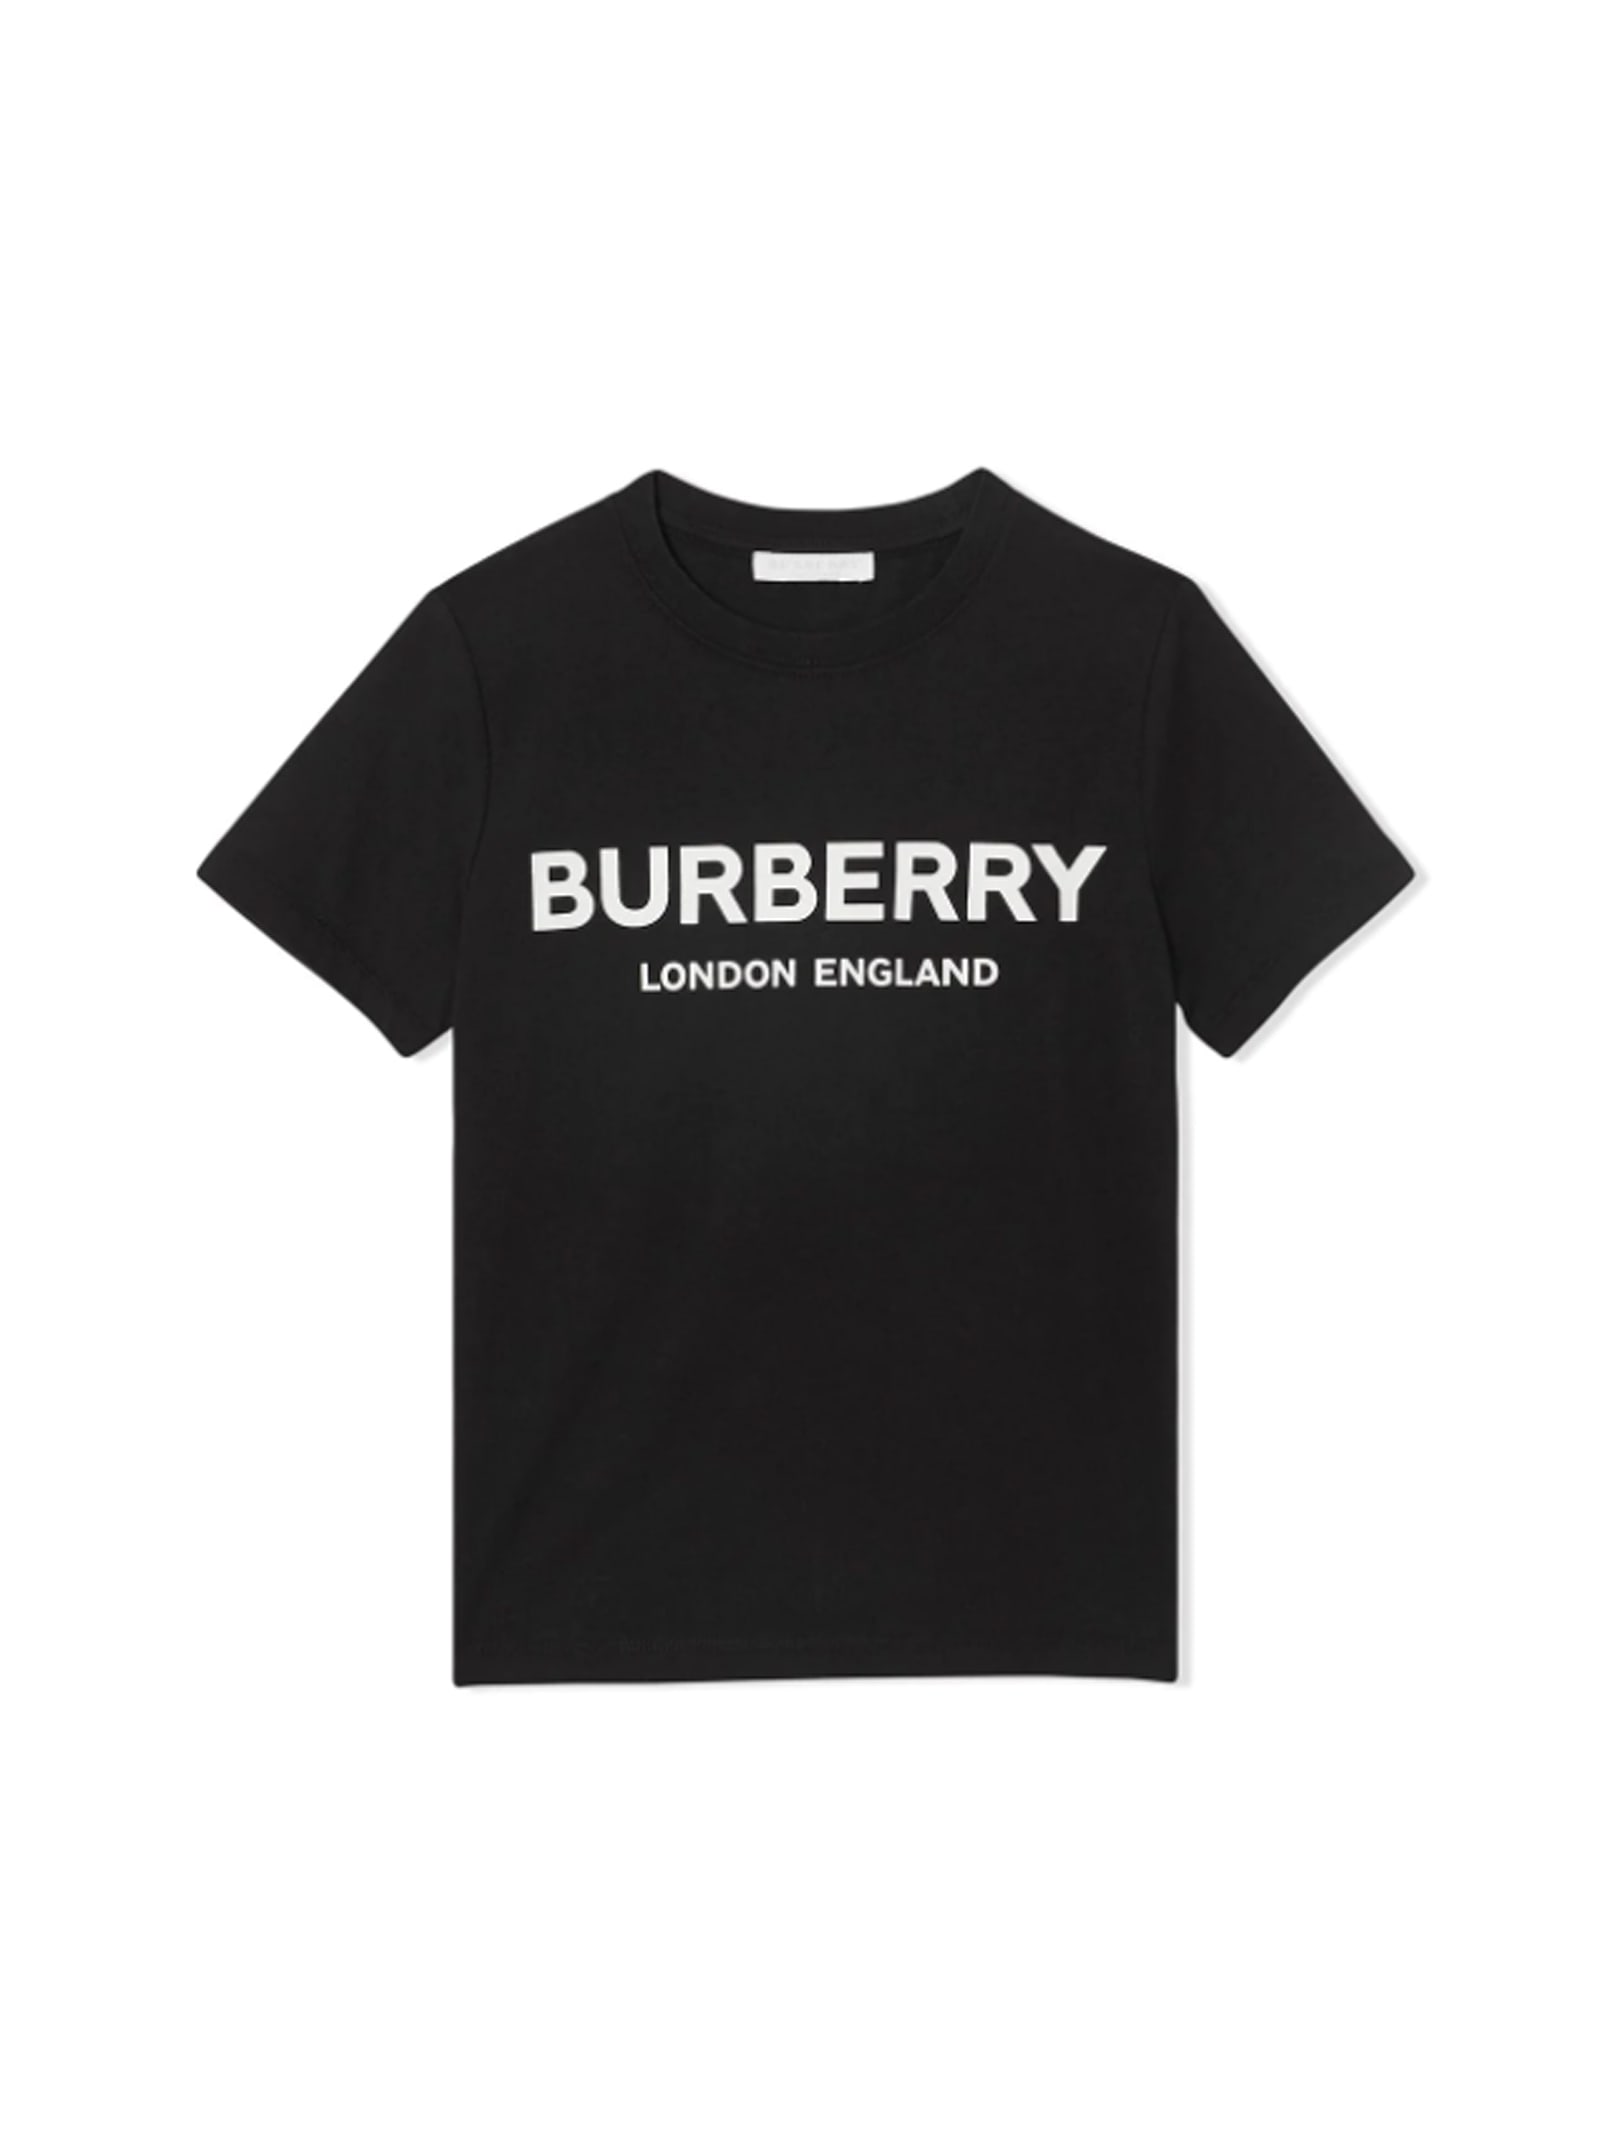 burberry tee shirt